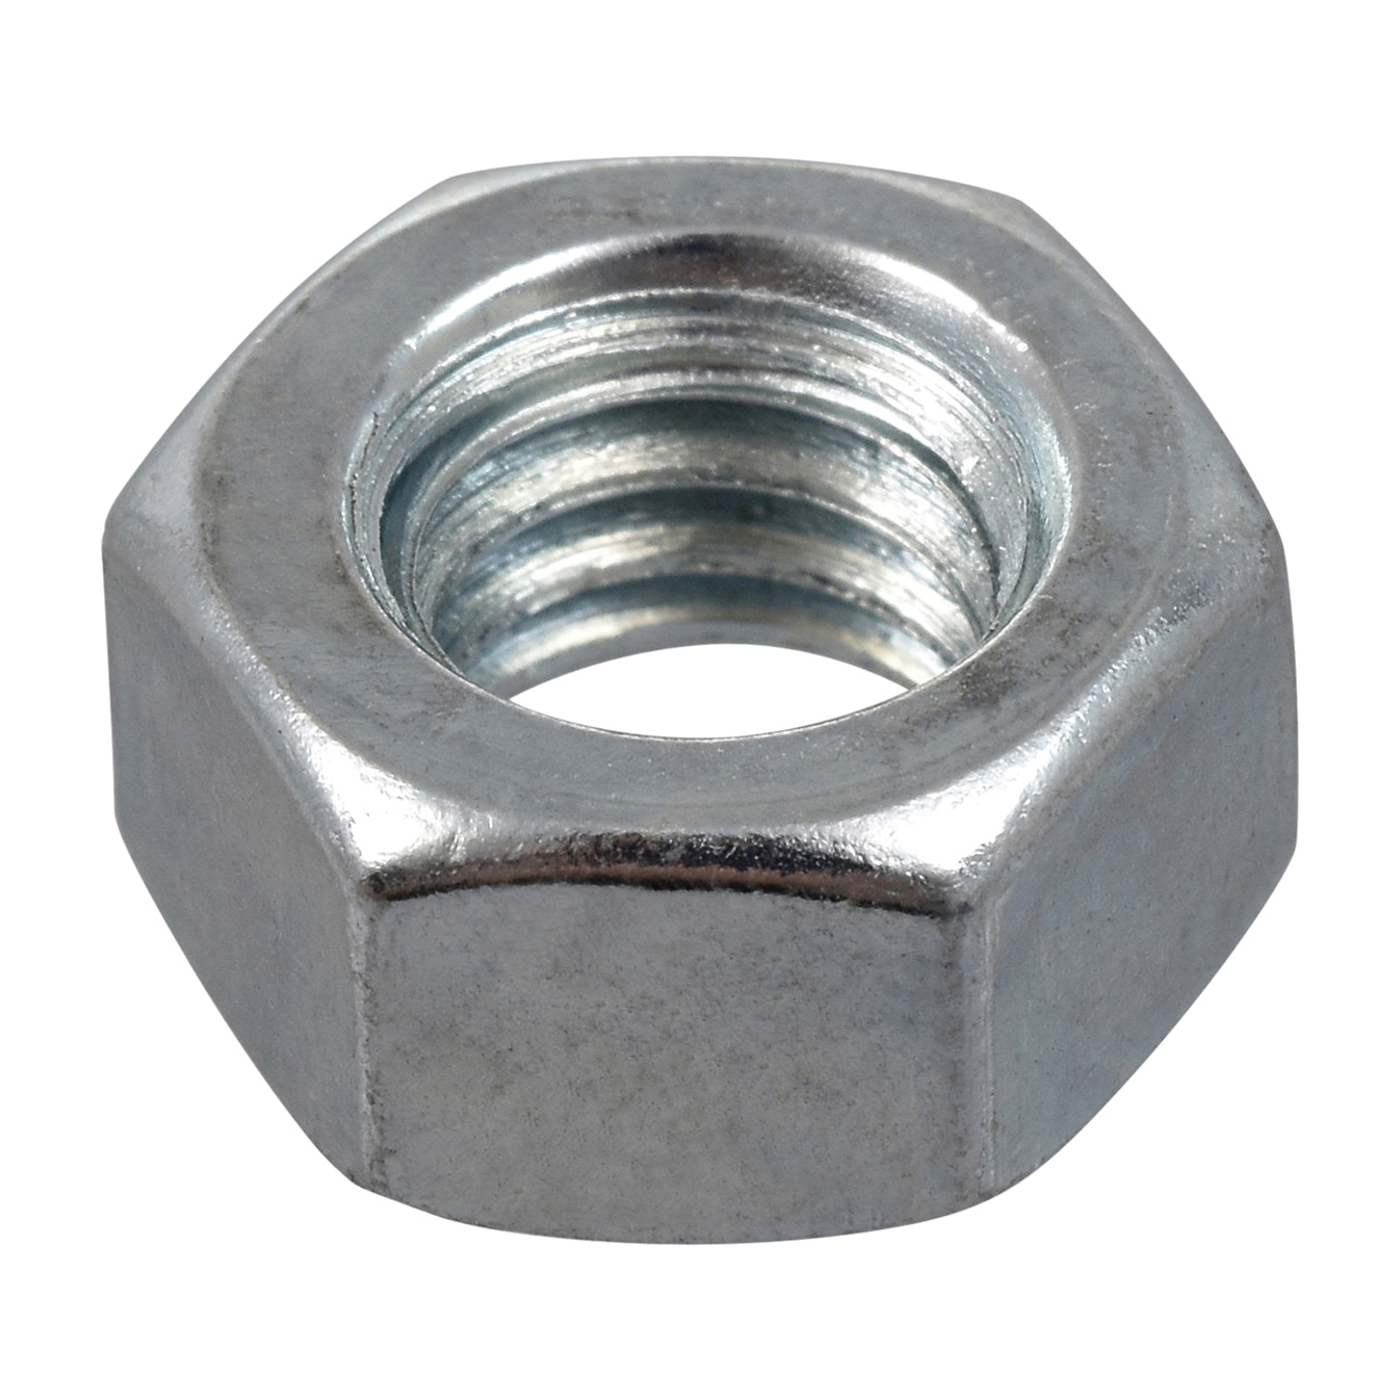 880794 Hex Nut, M4-.7 Thread, Steel, Zinc-Plated